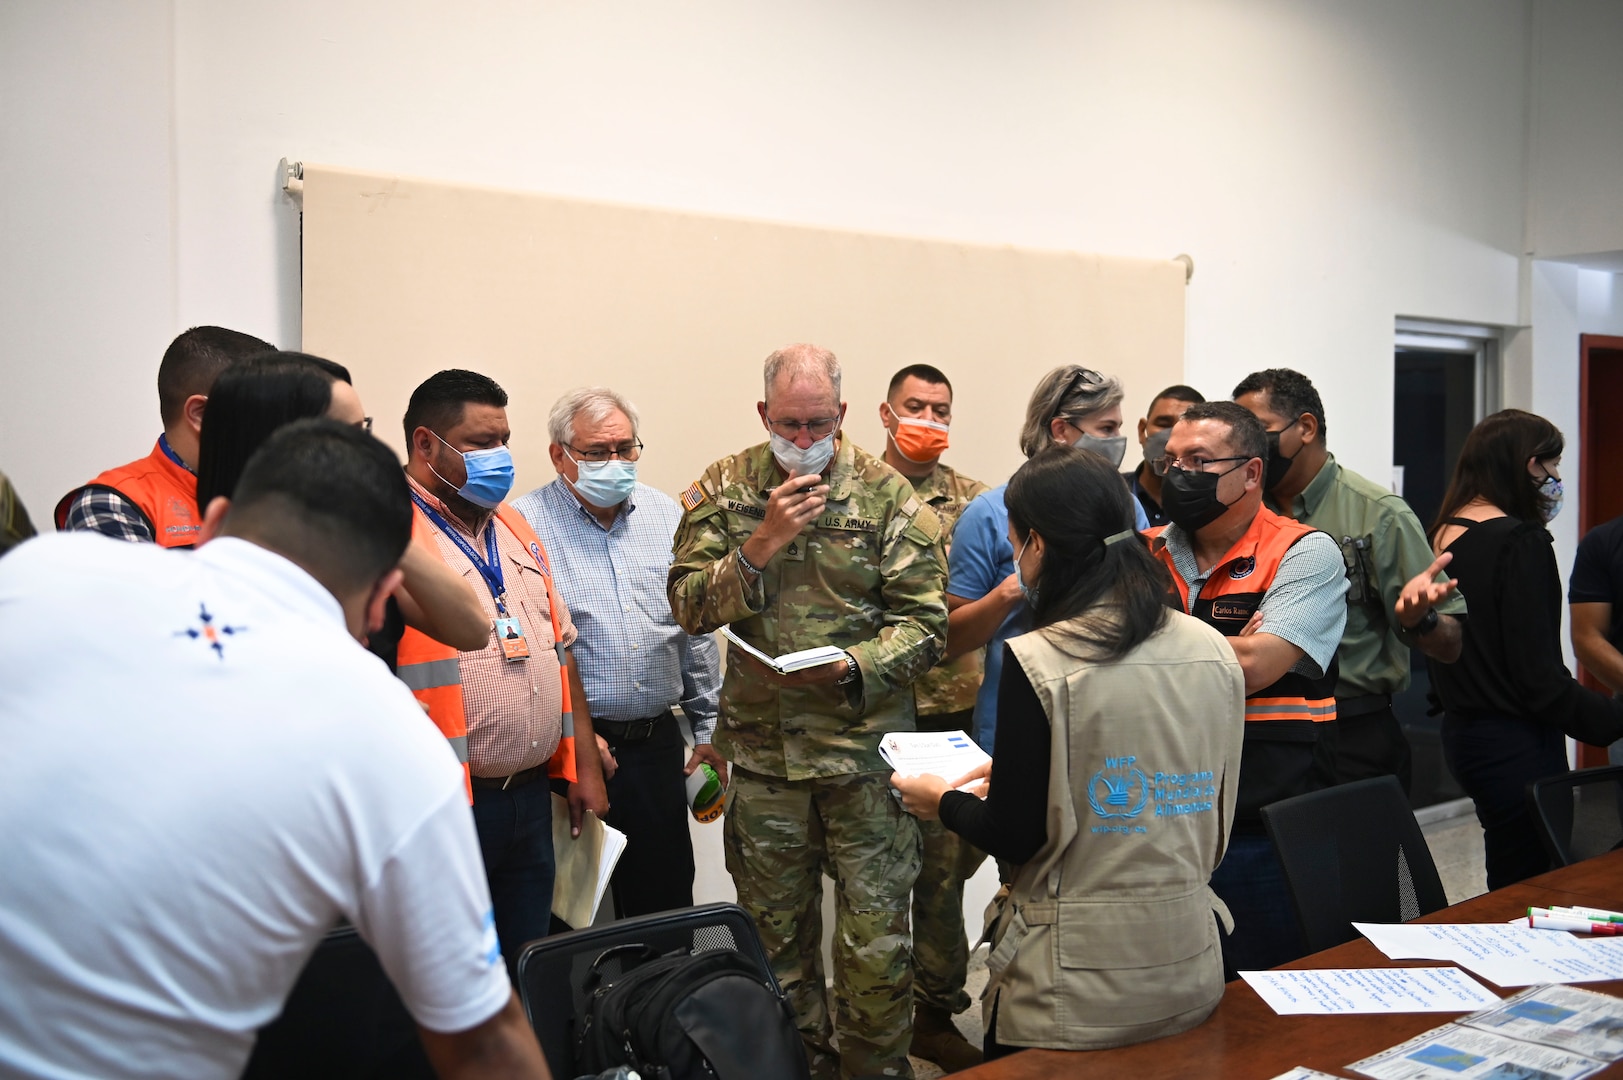 JTF-Bravo, Honduras, building trust and disaster preparedness